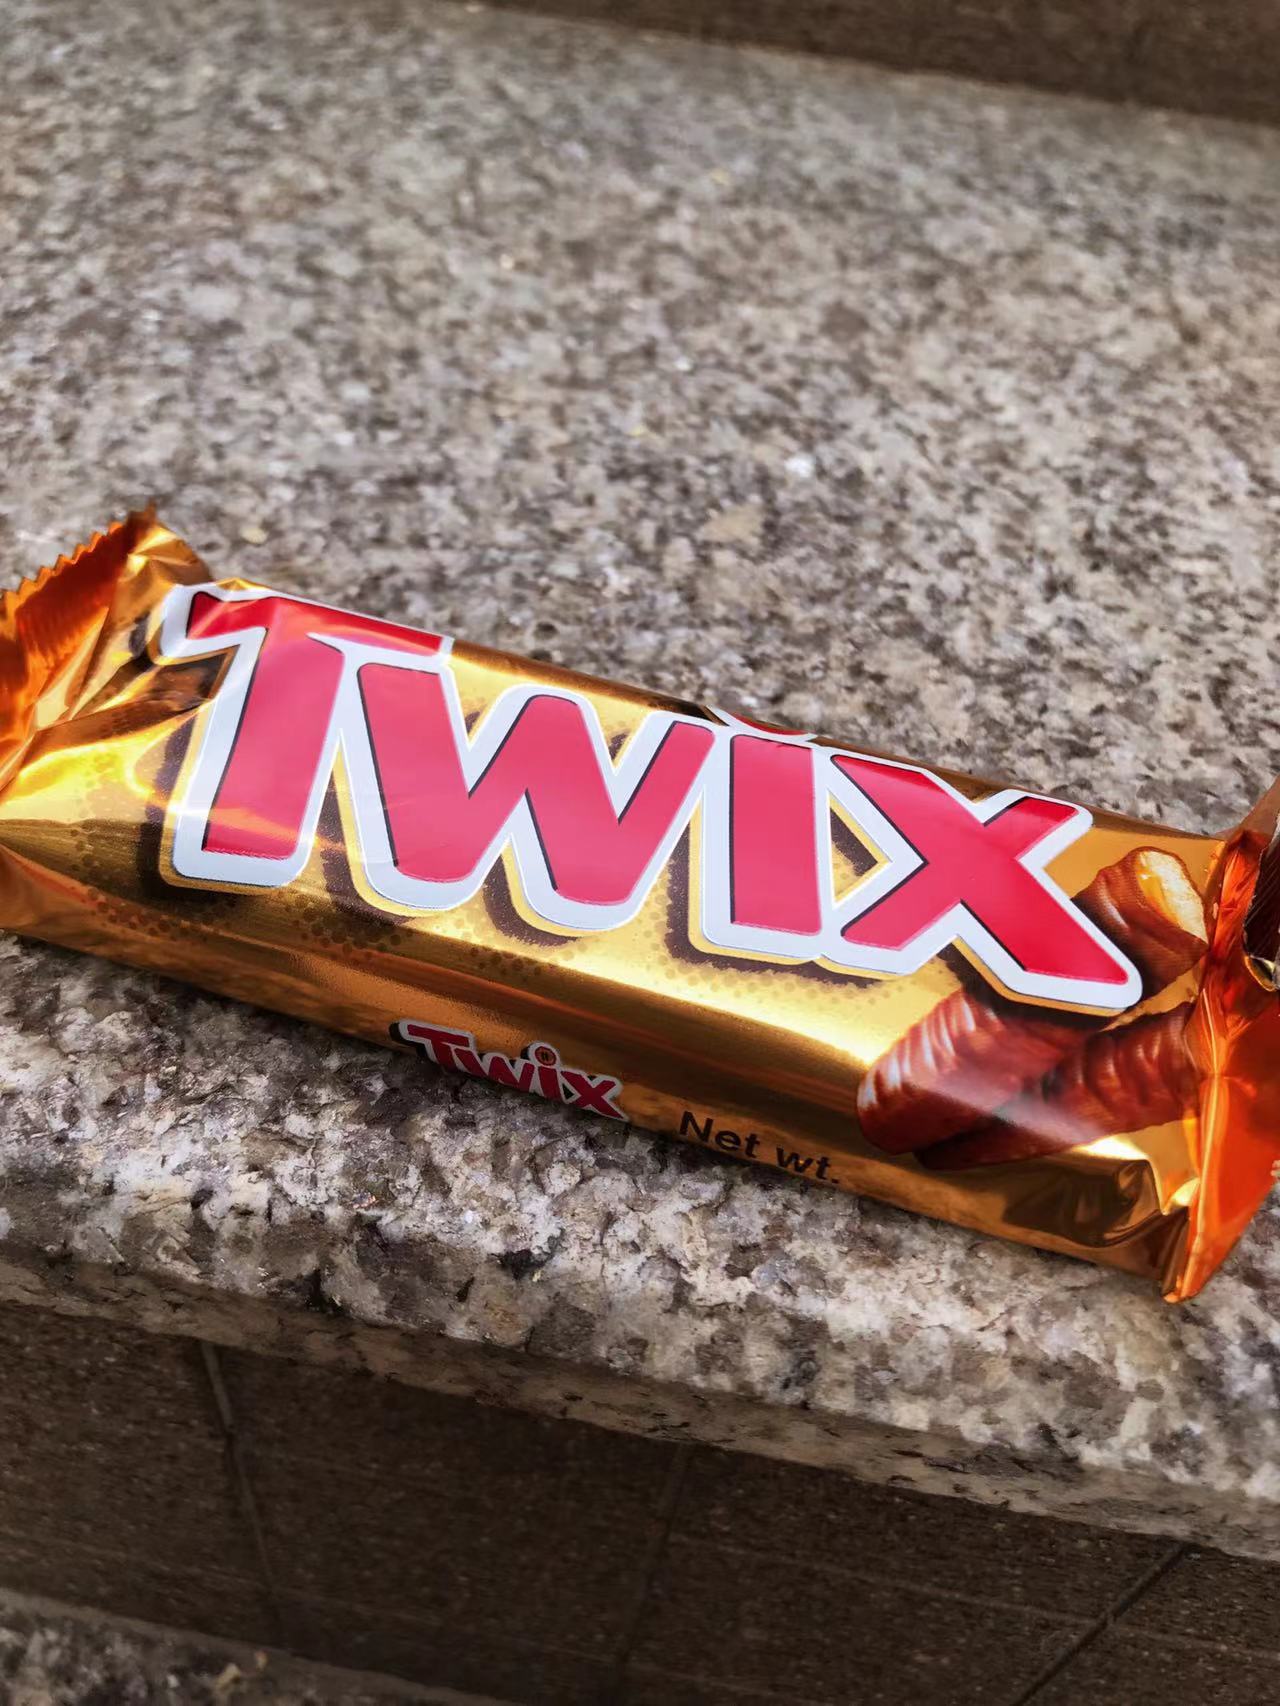 Chocolate焦糖夹心巧克力 休闲食品零食小吃Twix 50G进口巧克力